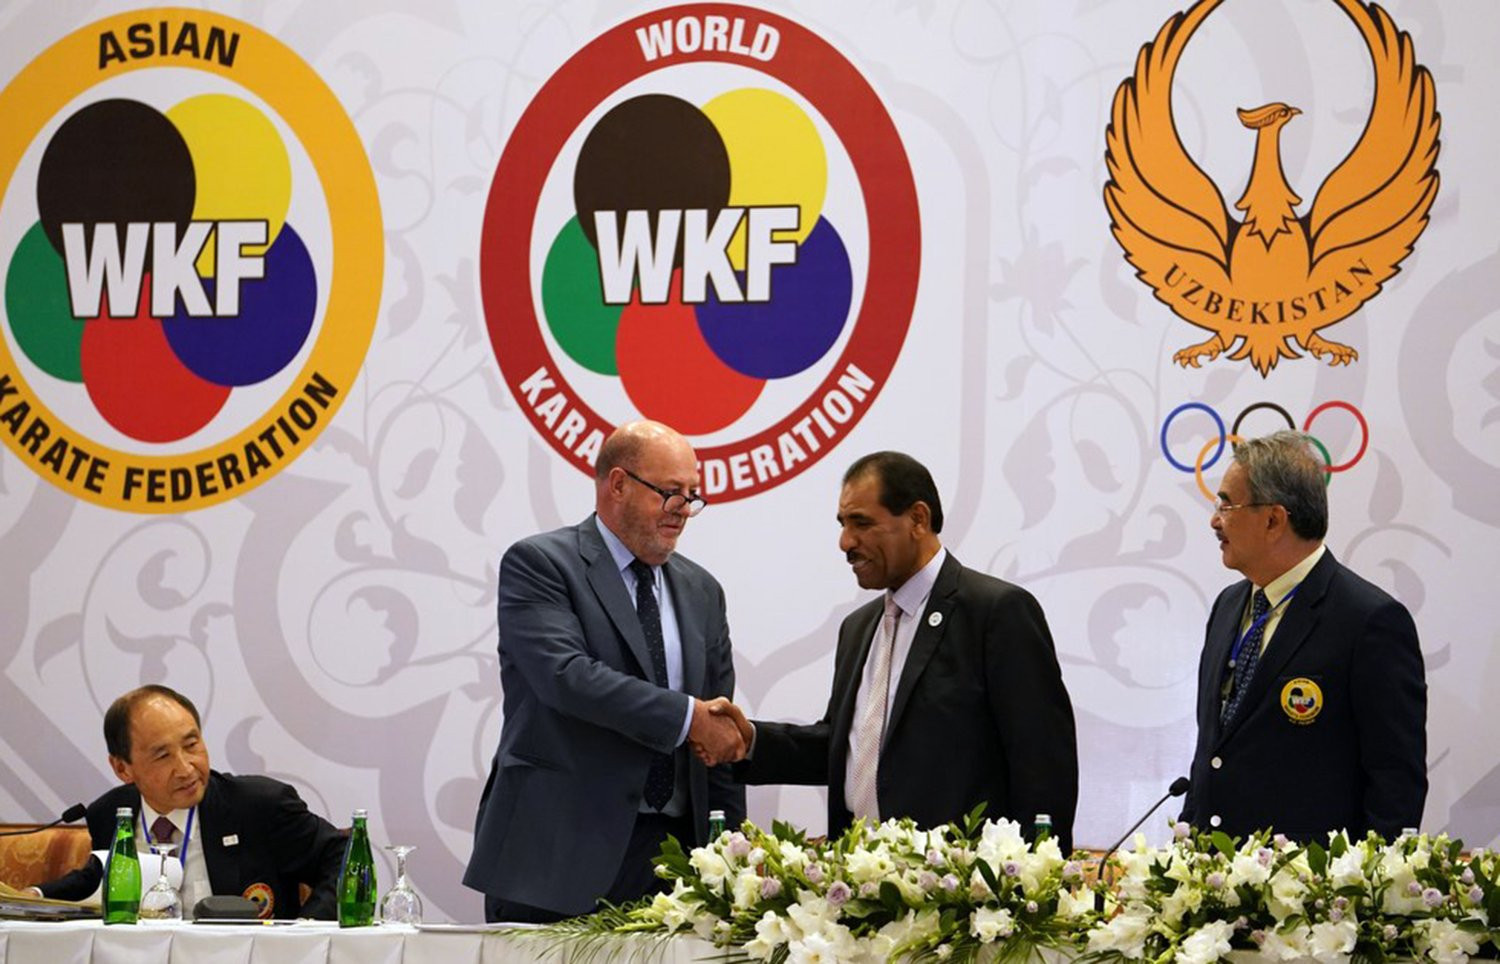  WKF President Espinós sees Nasser Alrazooqi elected as Asian Karate Federation President